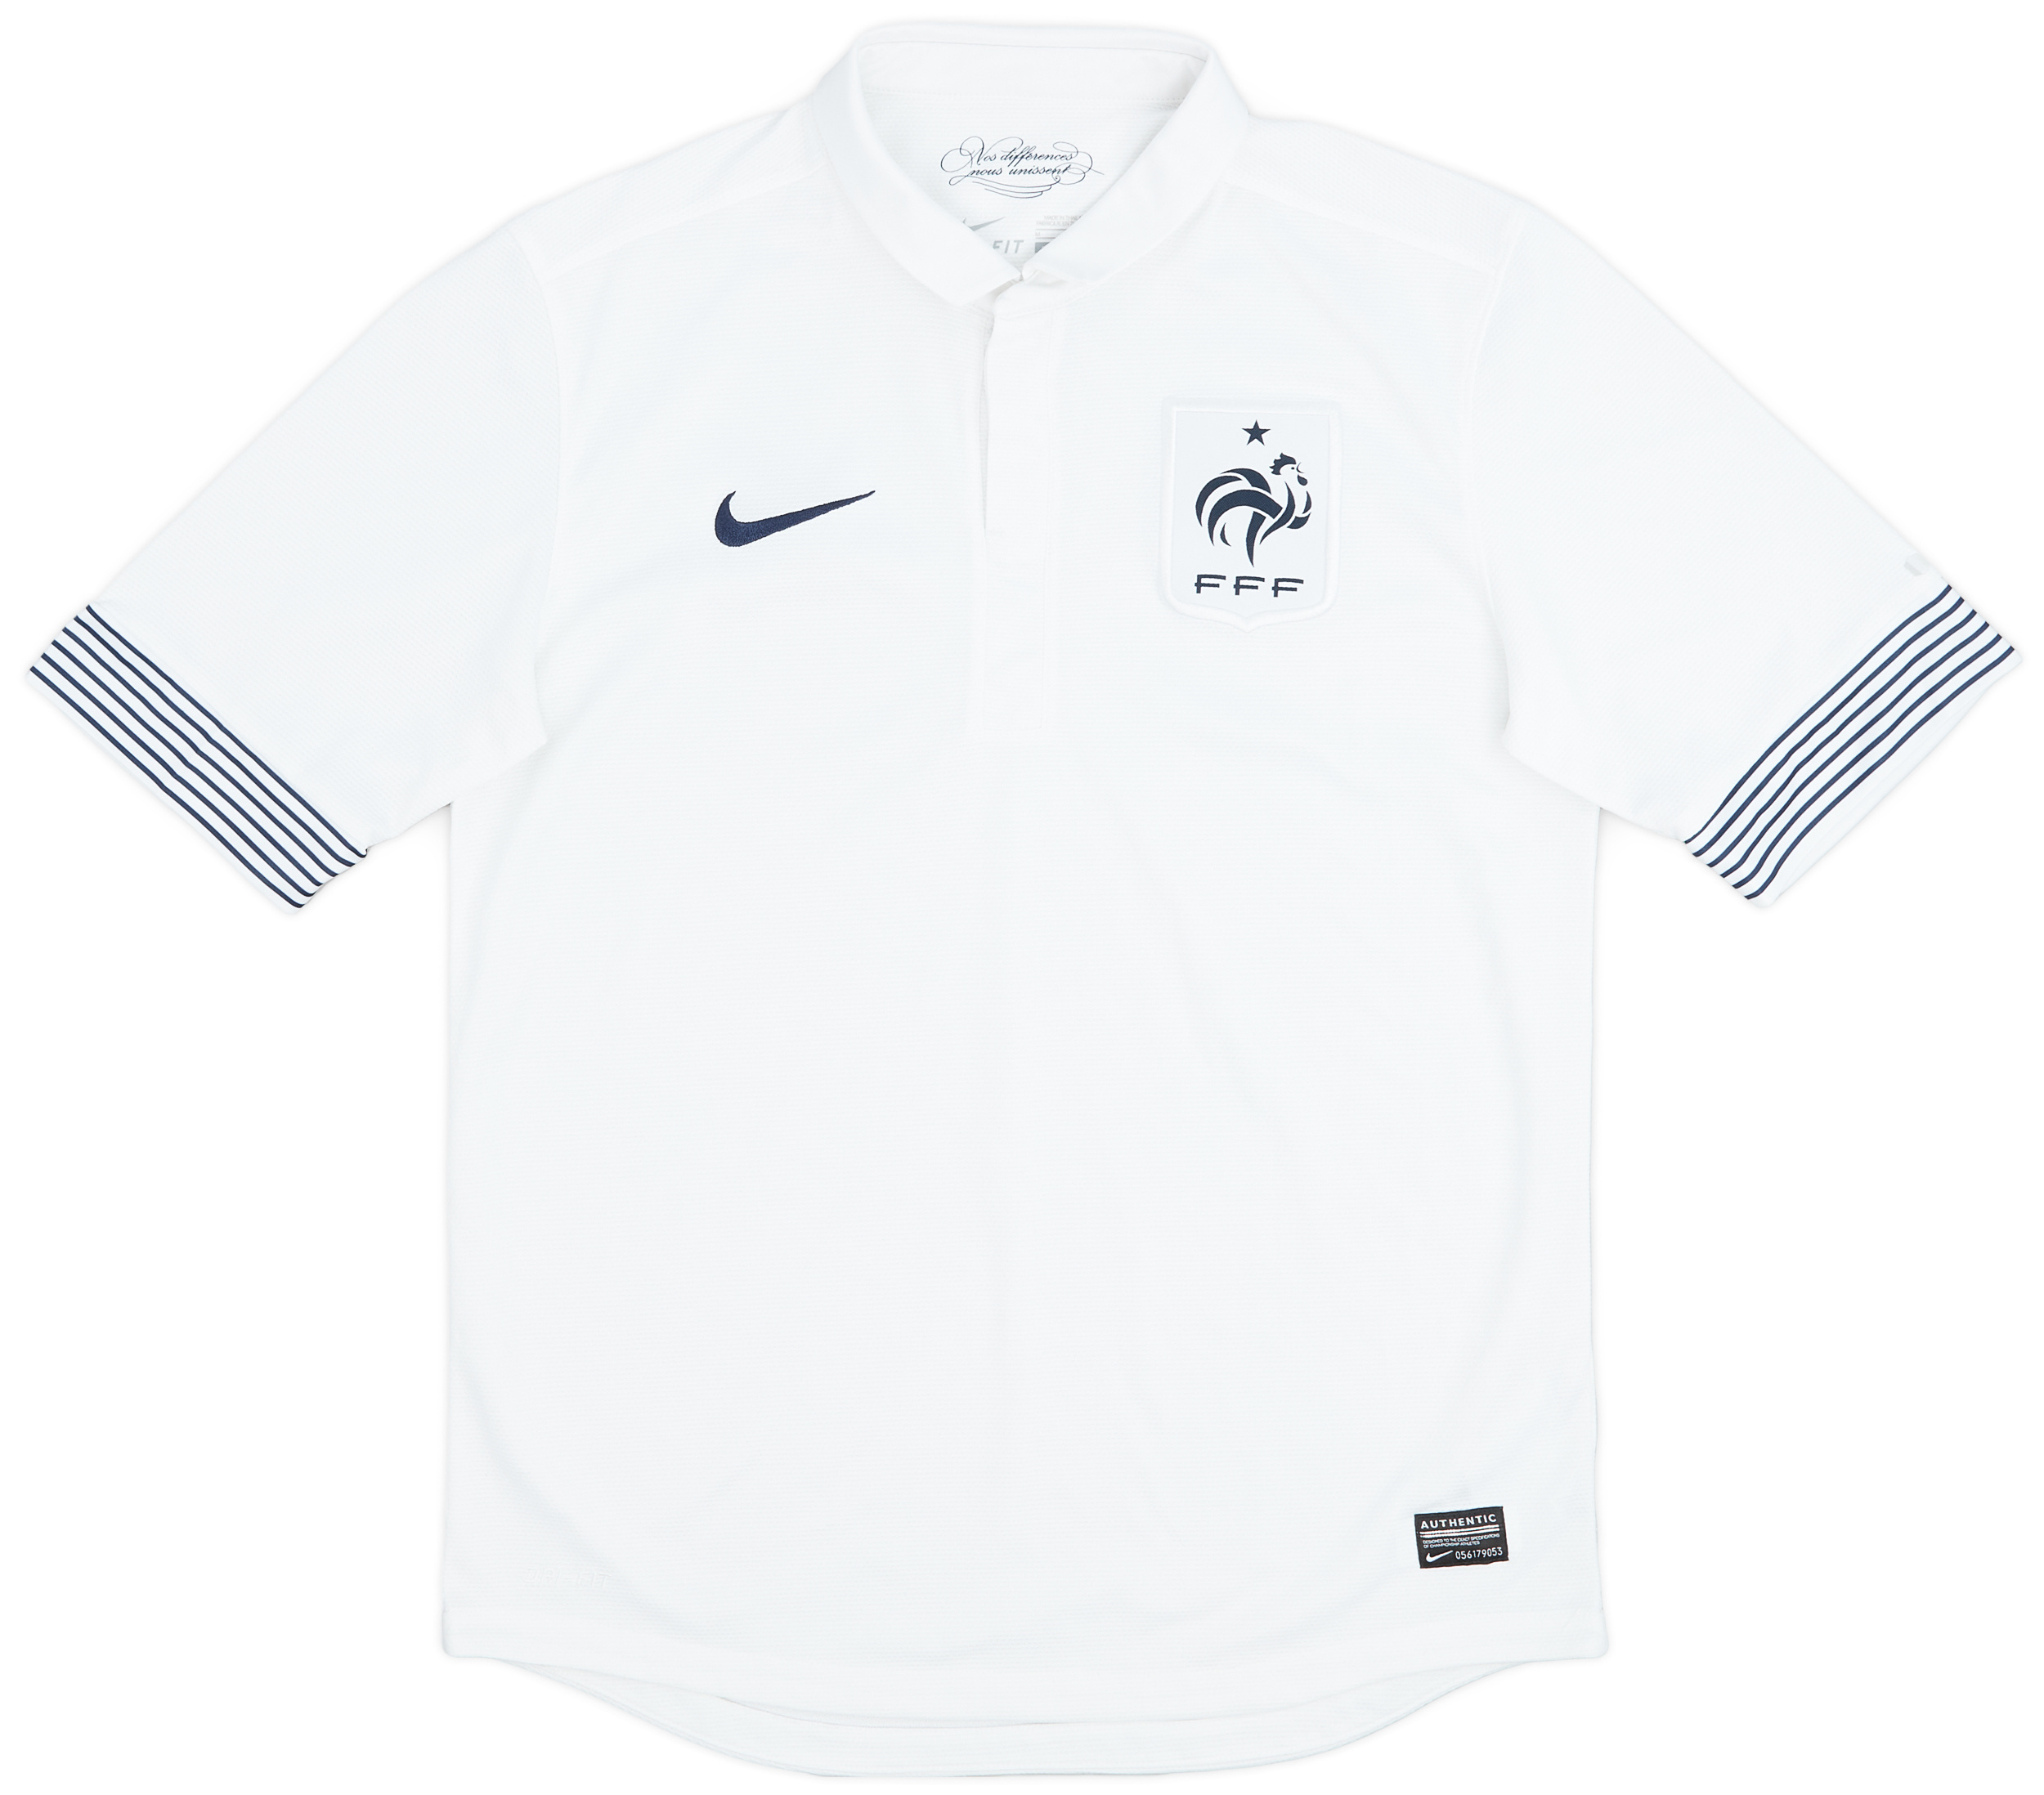 2012-13 France Away Shirt - 9/10 - ()